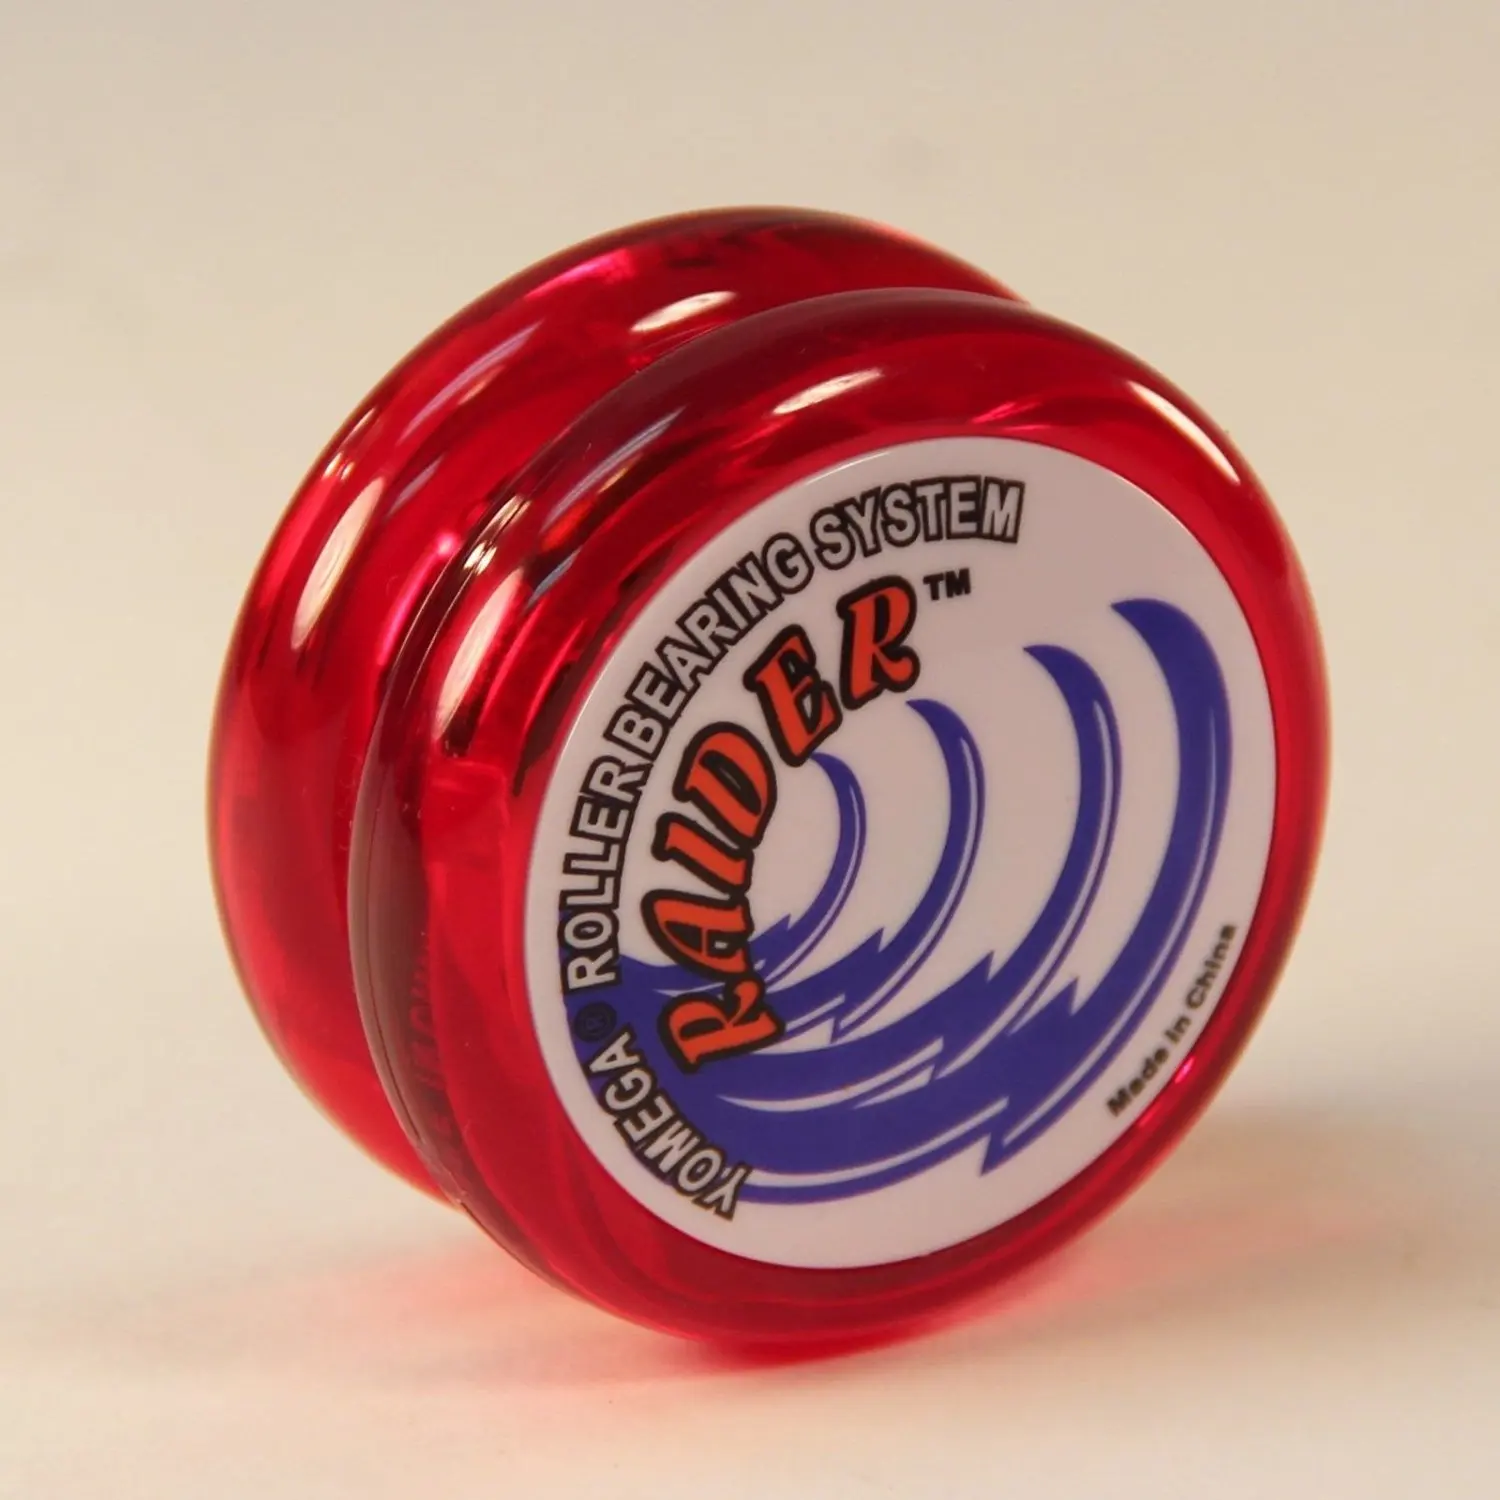 Yo yo bank. Йо йо Ghost 125. Йо-йо игрушка yo-yo Wolf yo-yo 22062203w. Йо йо игрушка 626. Йо йо с логотипом.